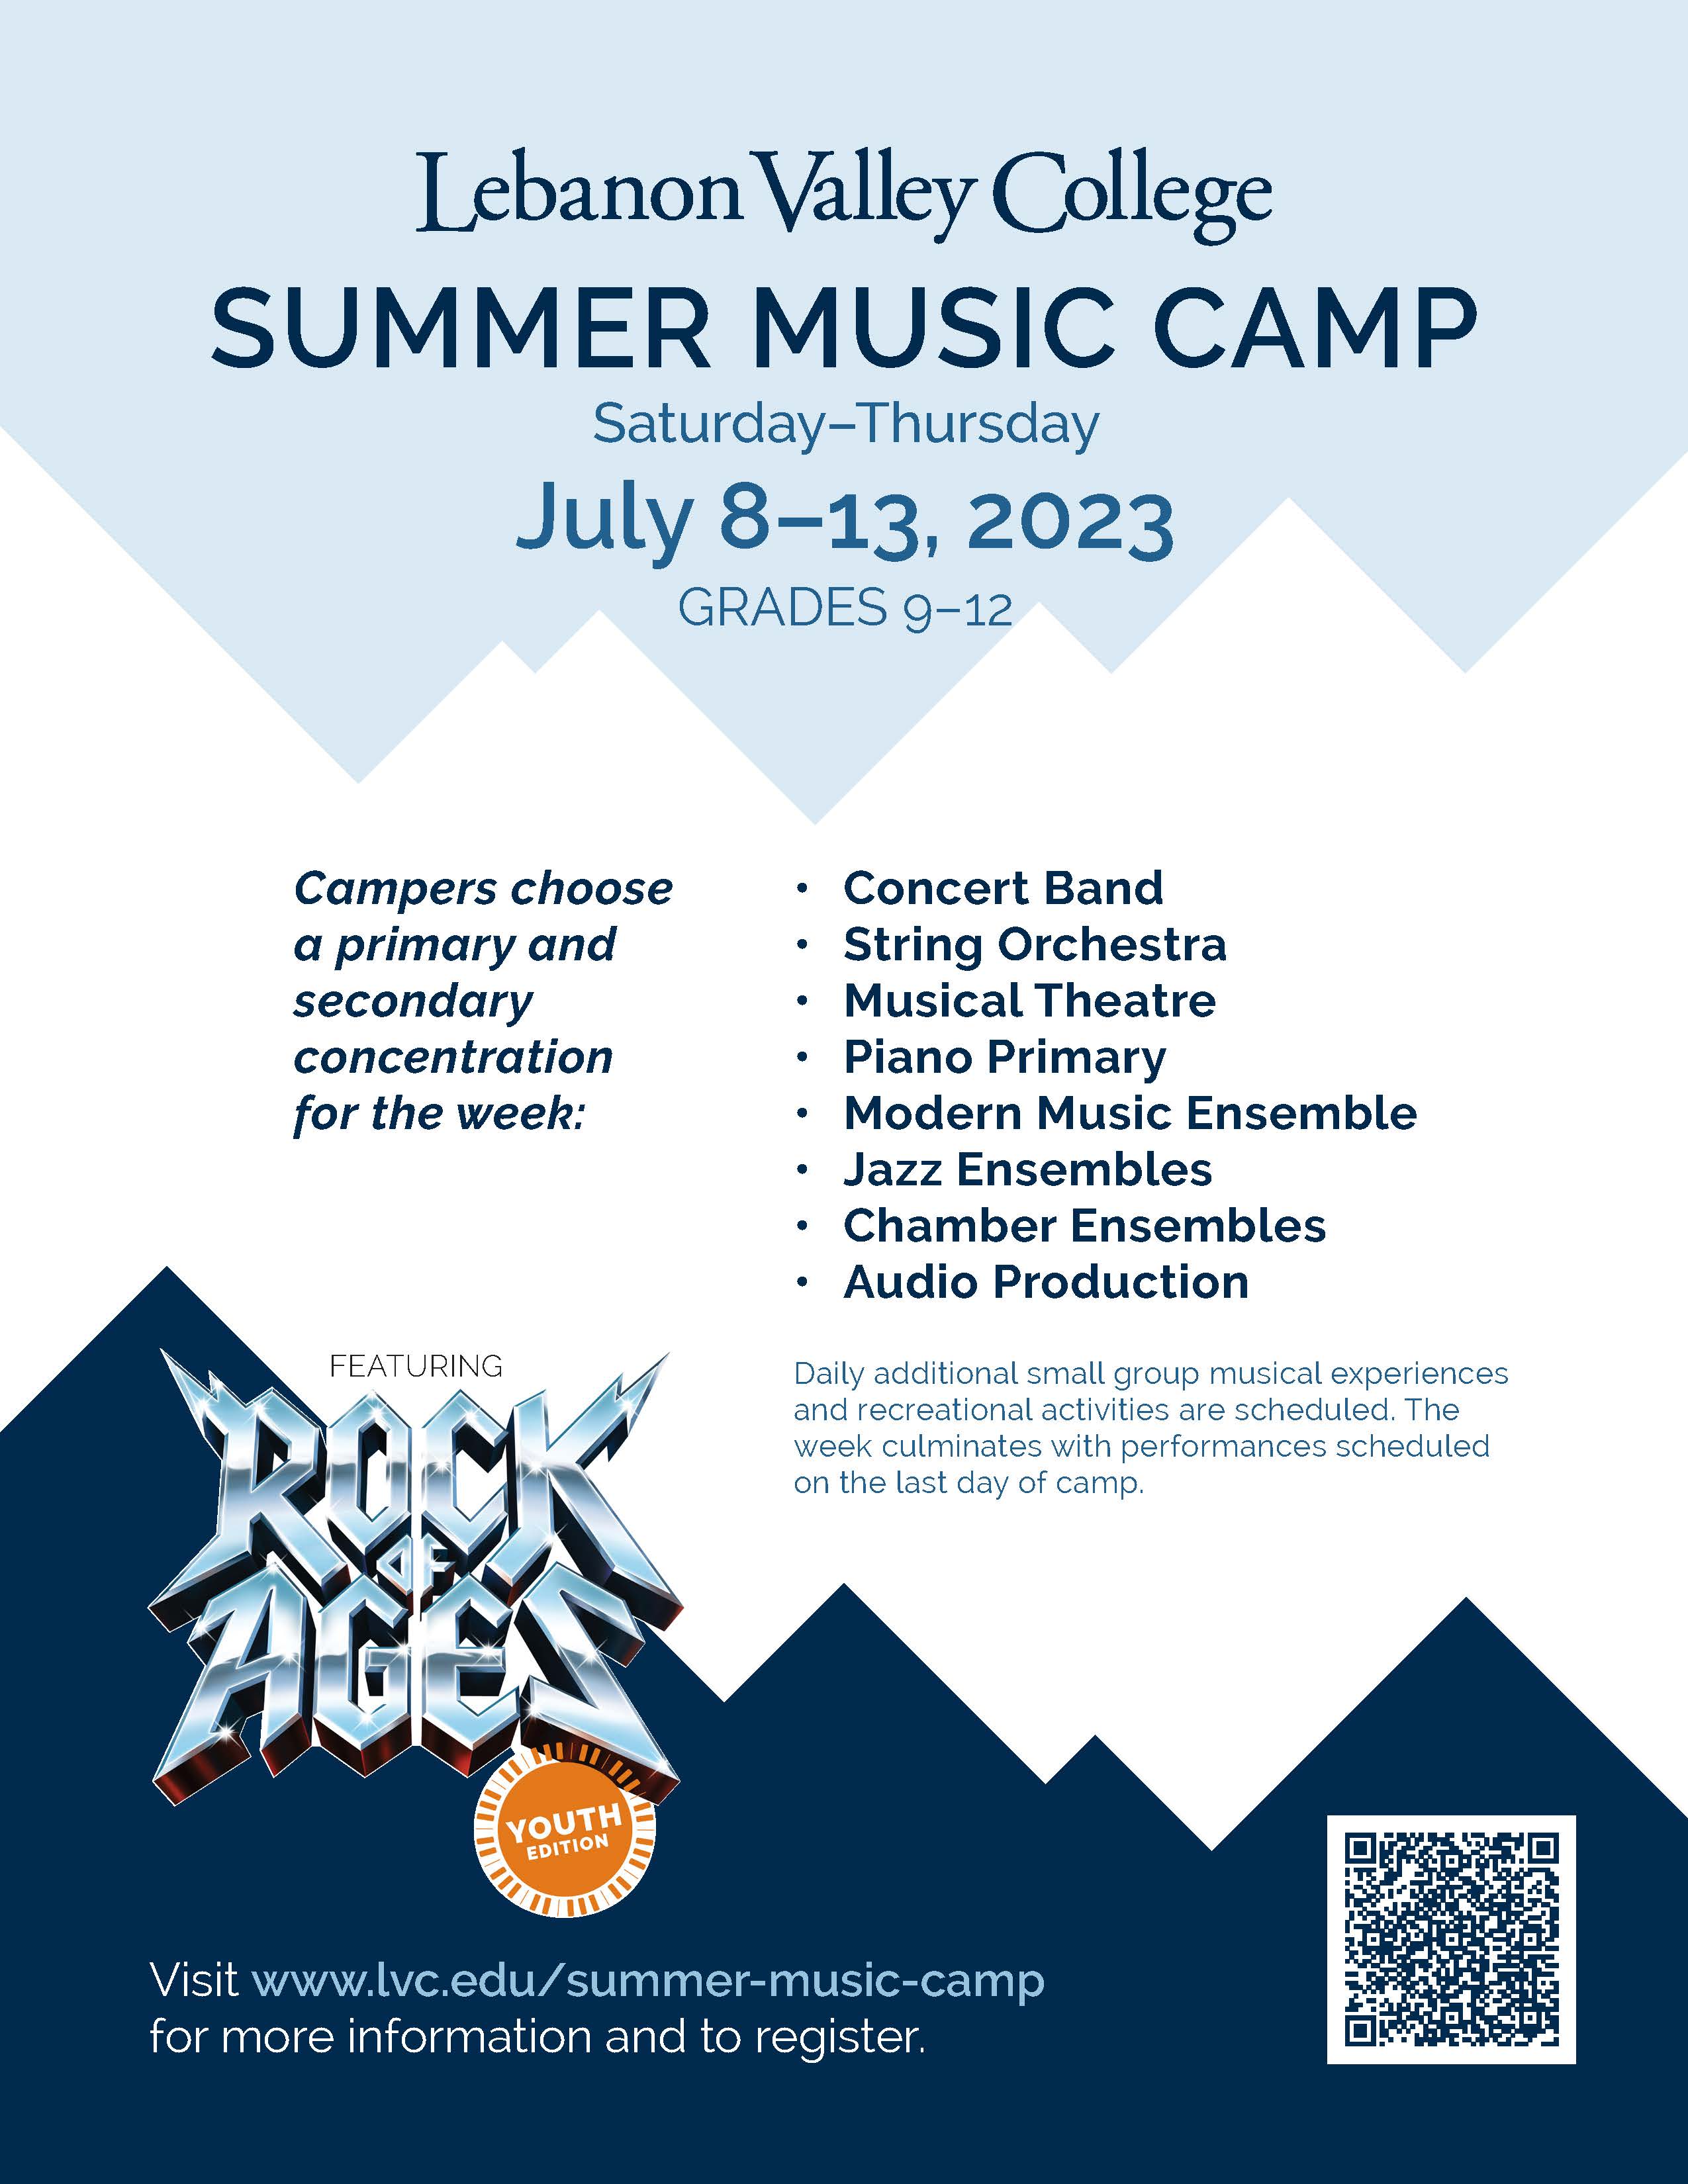 Lebanon Valley College Summer Music Camp